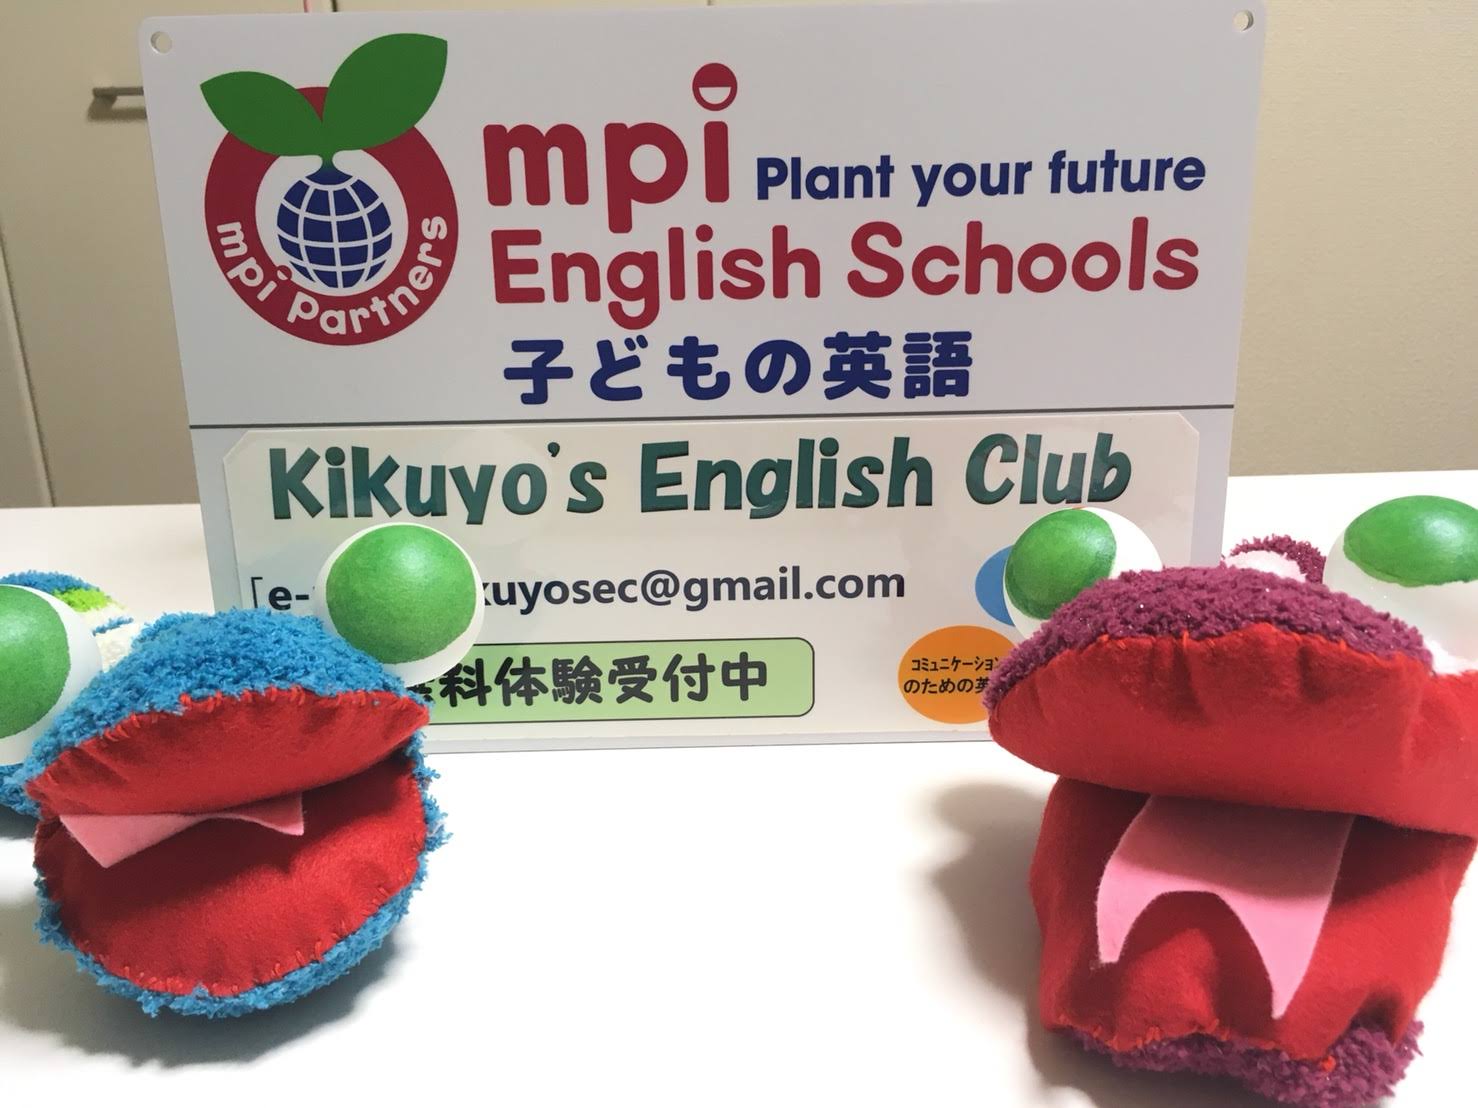 Kikuyo's English Club